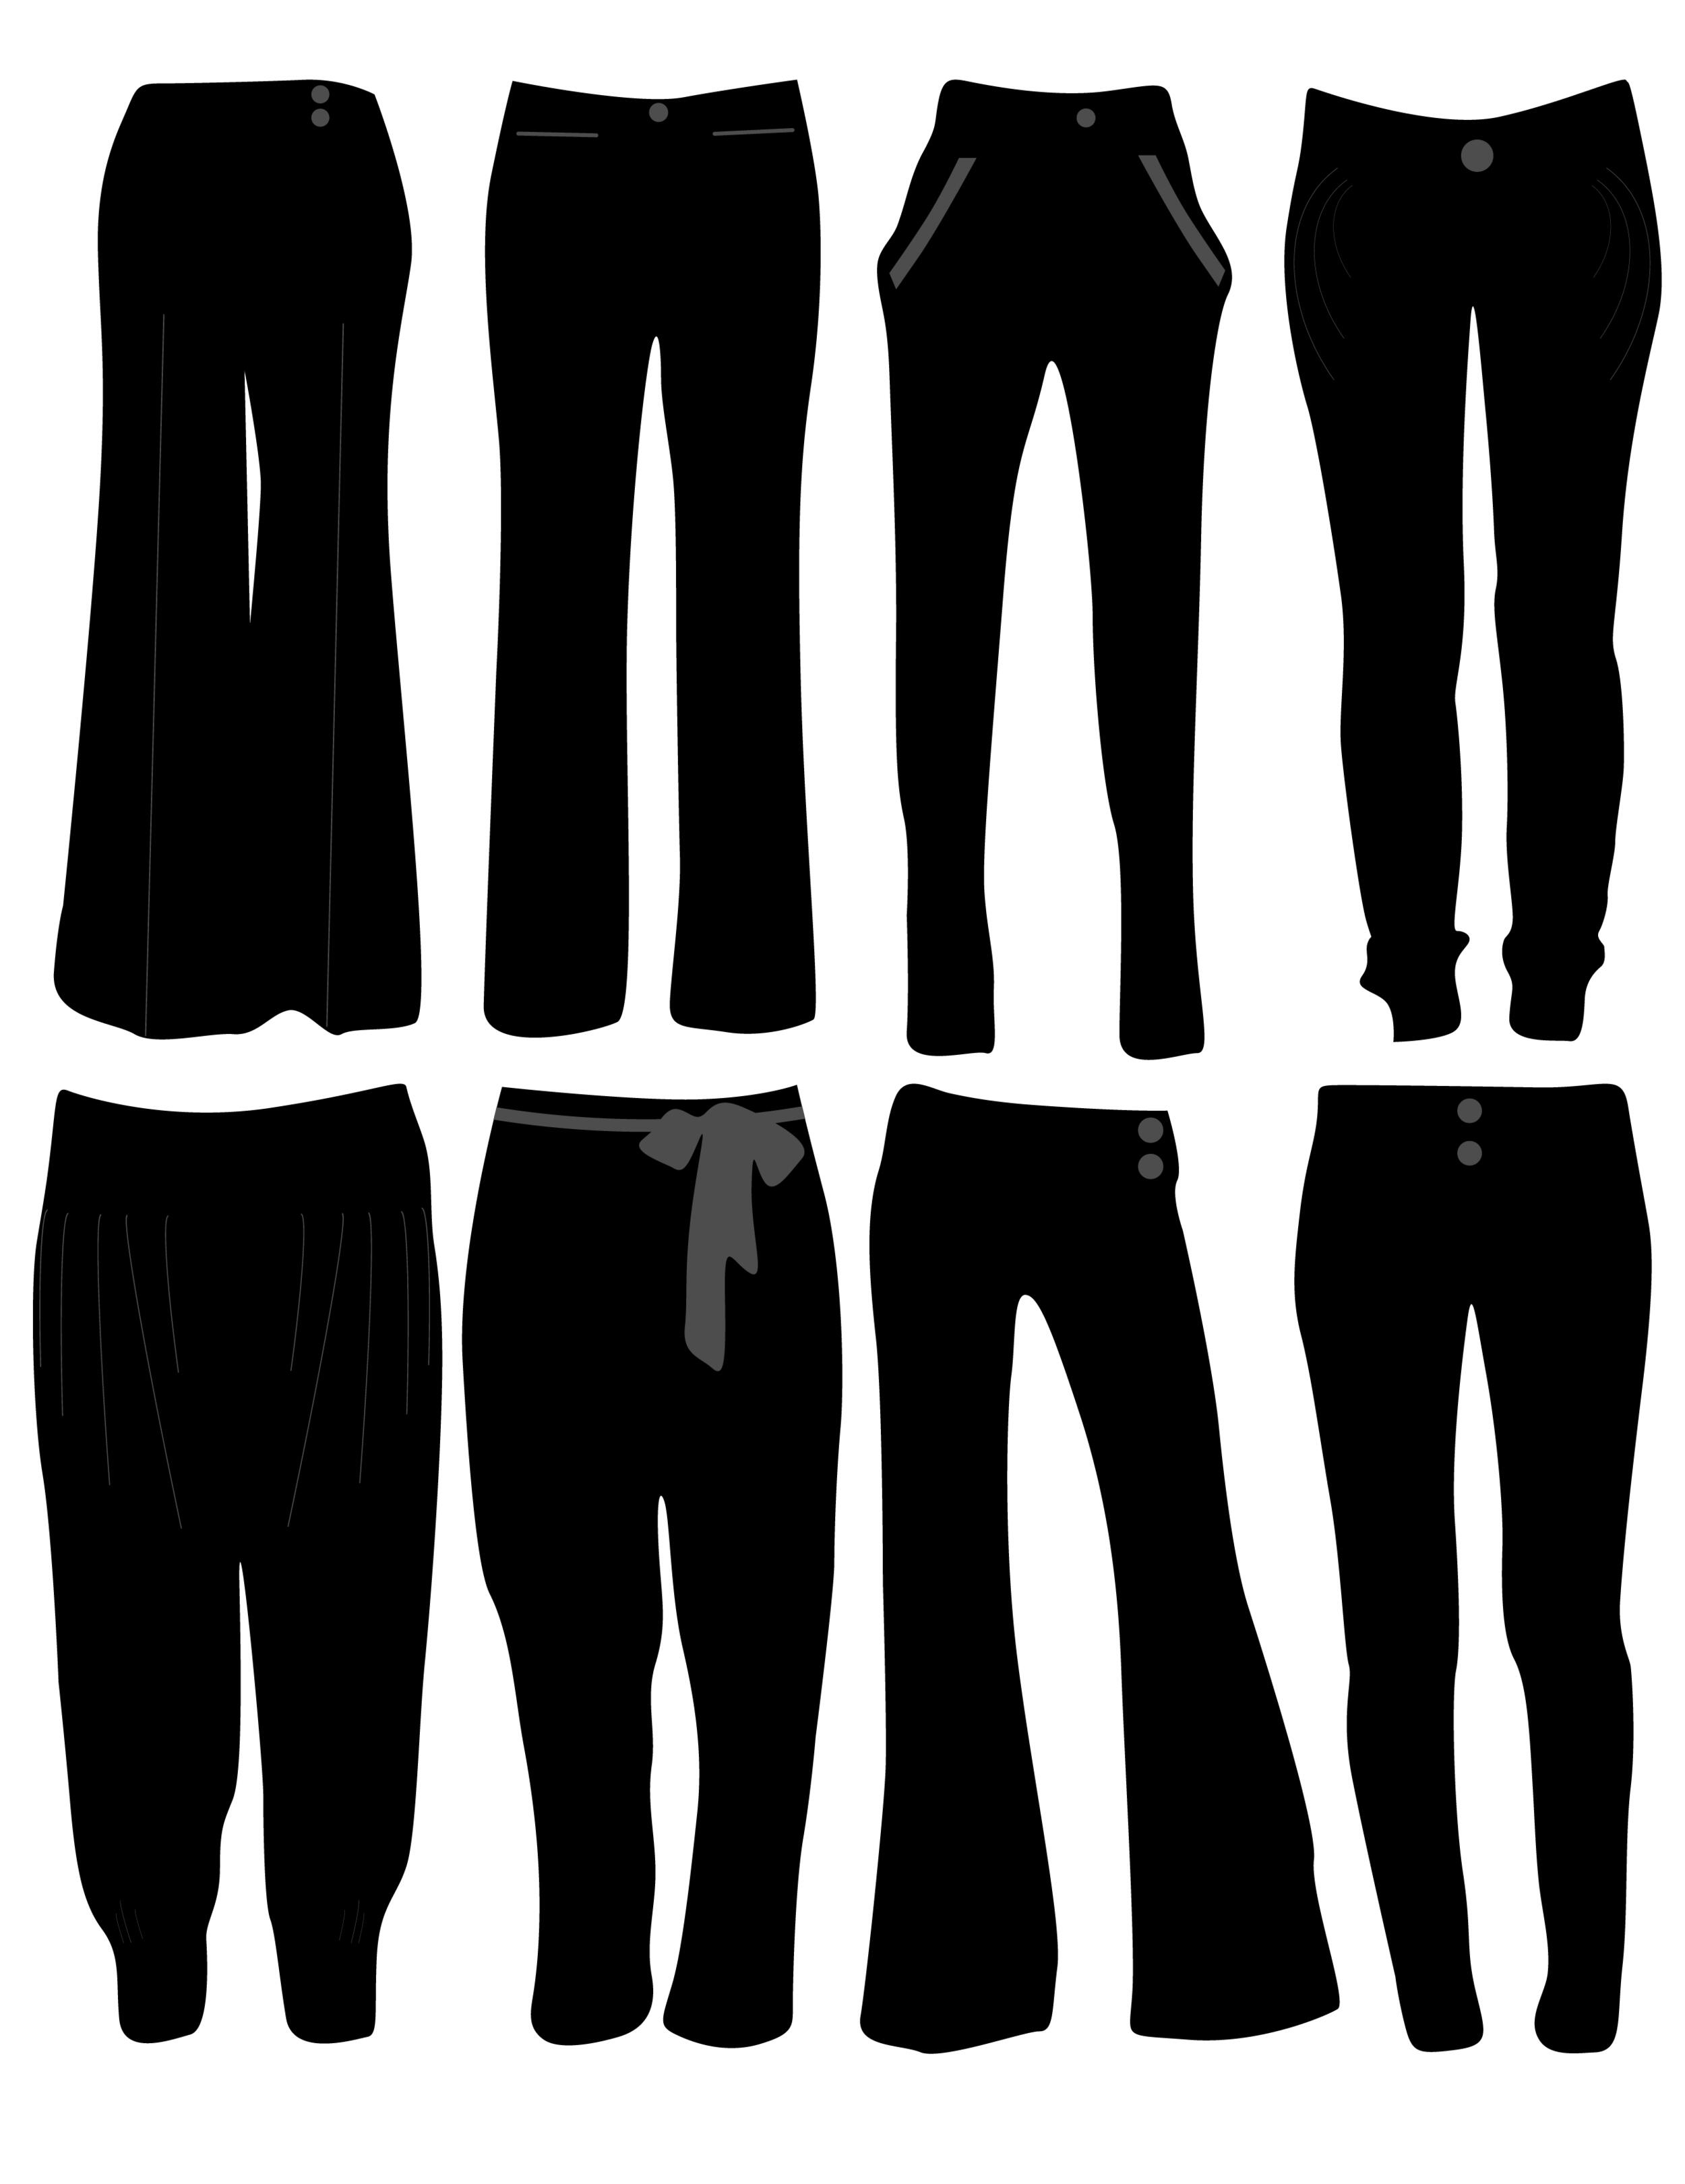 crne pantalone, foto: BlankaB/Shutterstock